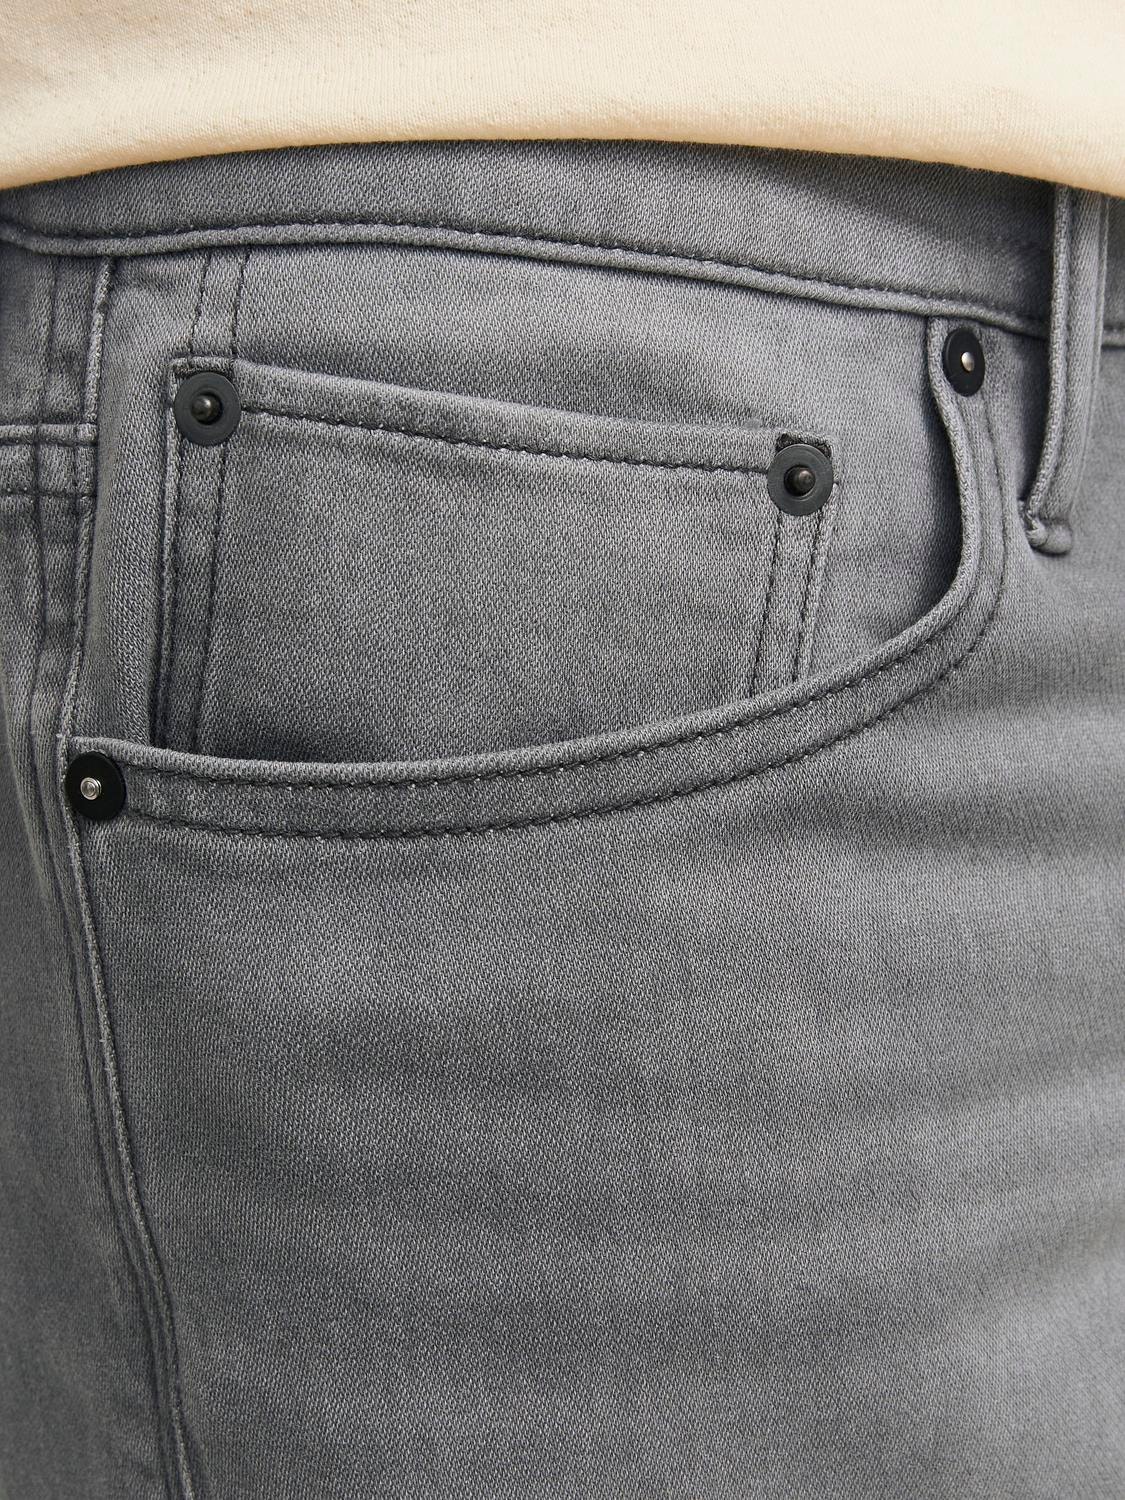 Jack & Jones Regular Fit Jeans Shorts -Grey Denim - 12249212